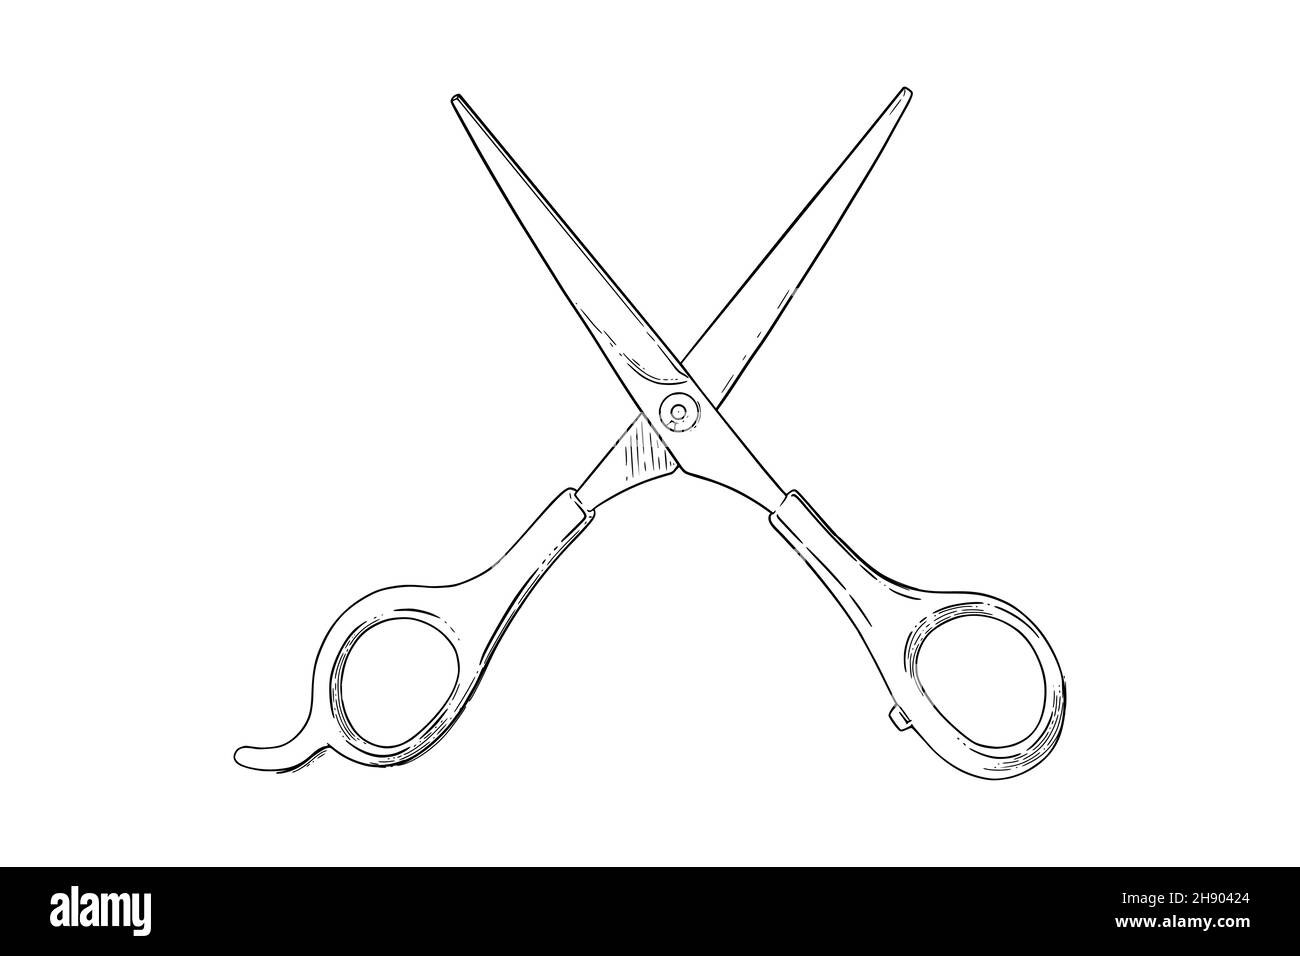 hair scissors drawing